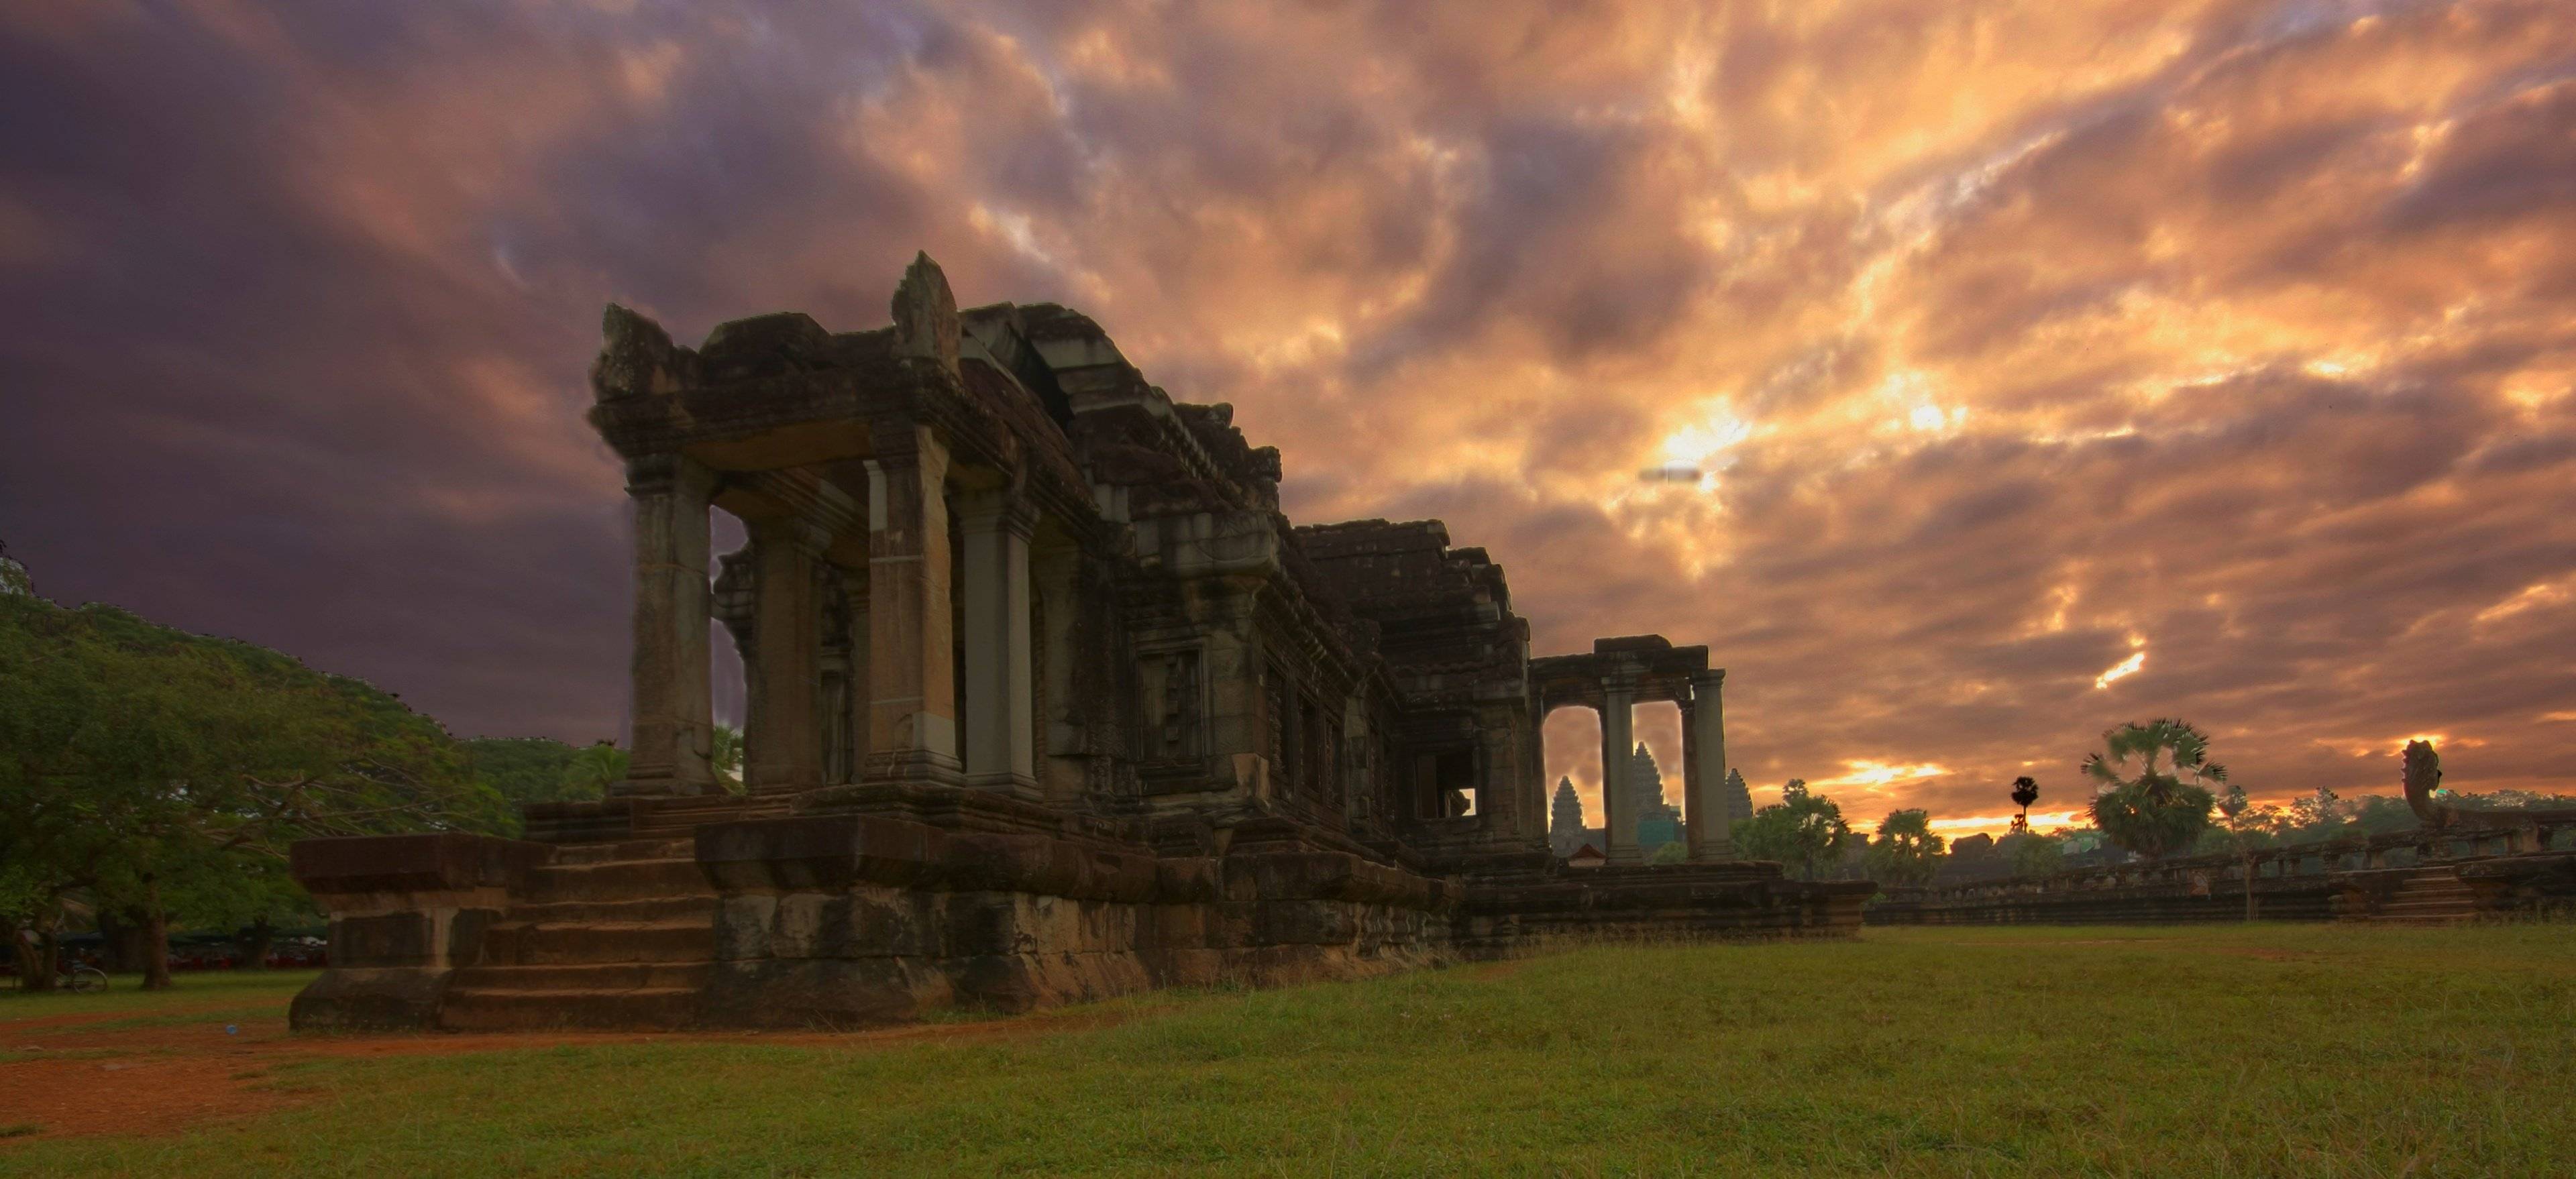 Visita deò sito archeologico di Angkor